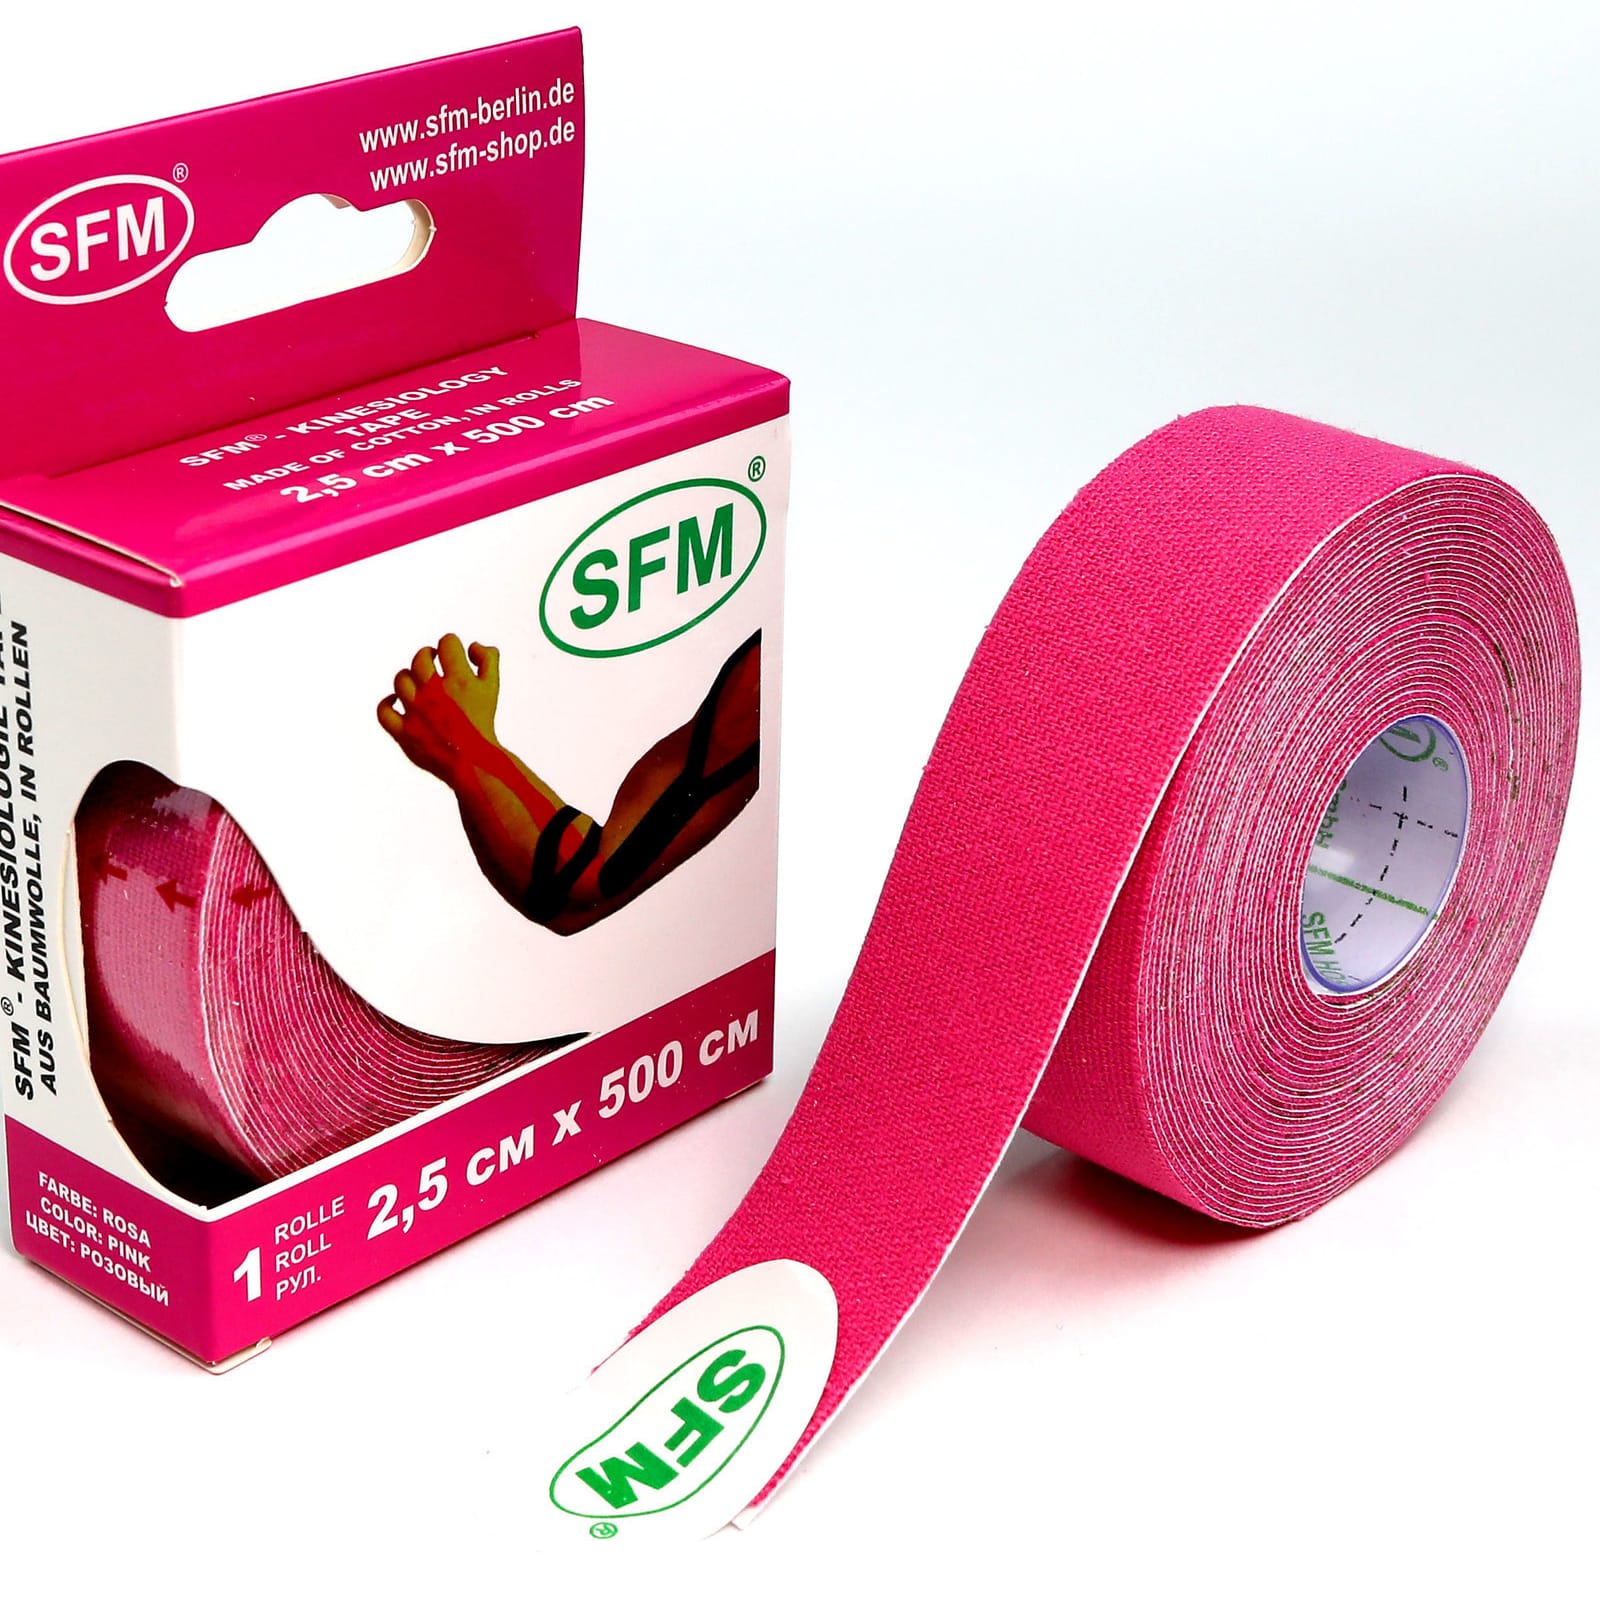 Кинезиотейп SFM Hospital Products Plaster на хлопковой основе 2.5х500 см розового цвета в диспенсере - фото 3